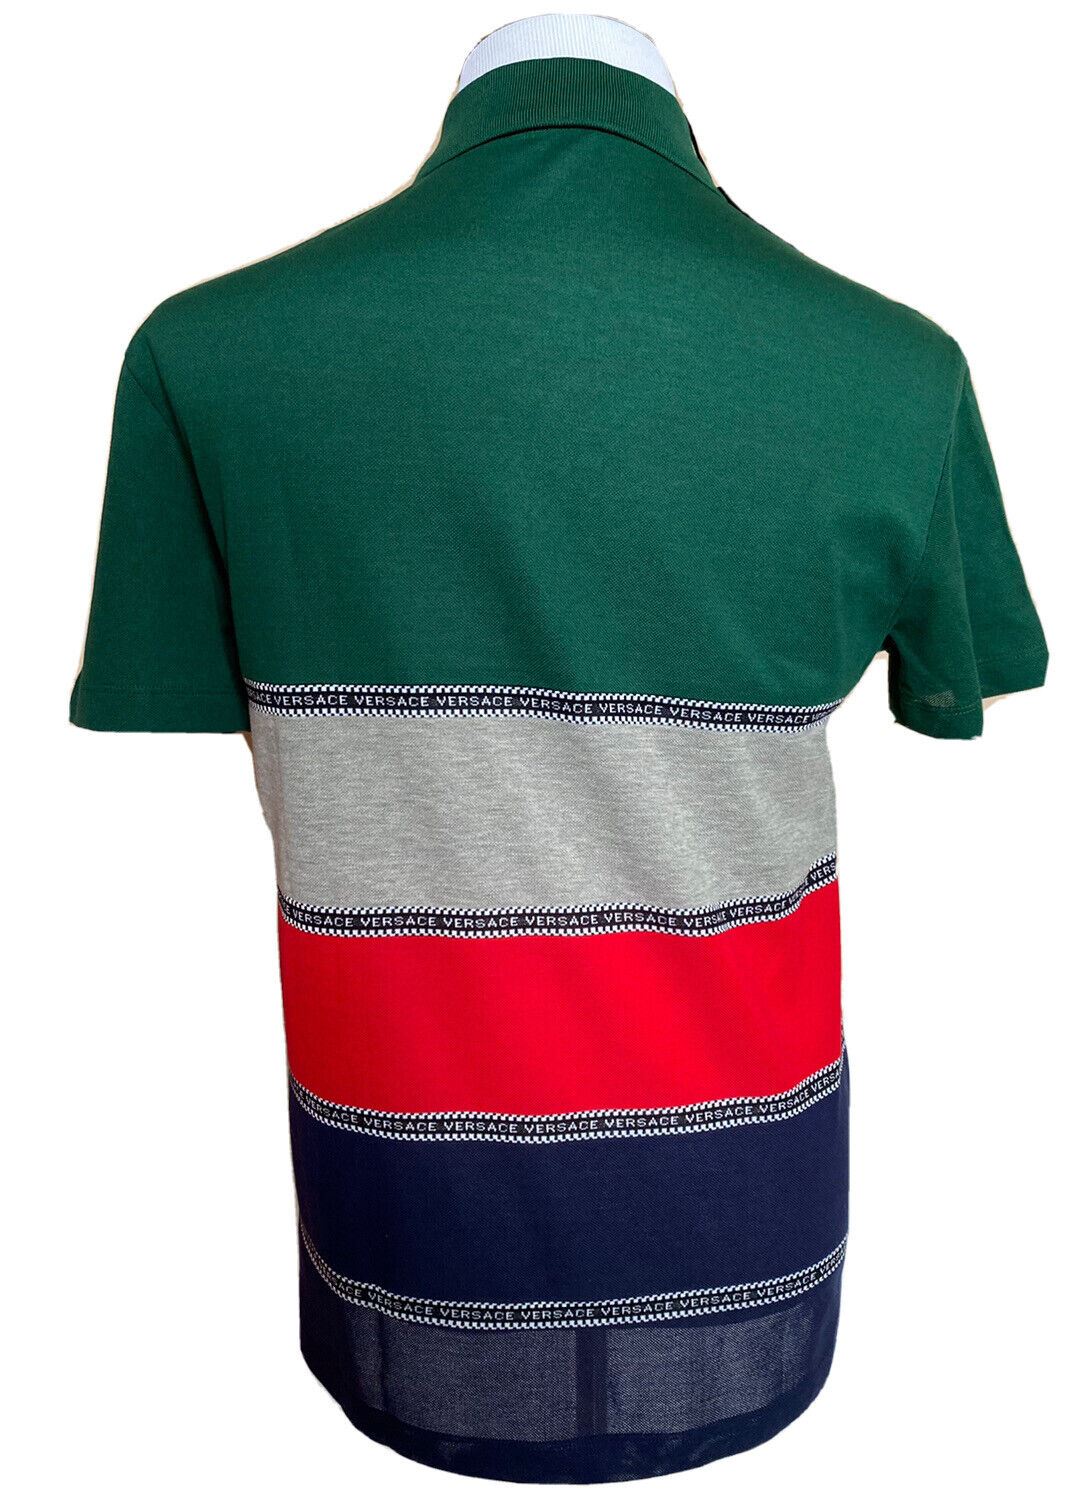 Neu mit Etikett: 650 $ Versace Blau gestreiftes maßgeschneidertes Baumwoll-Poloshirt Medium A84992